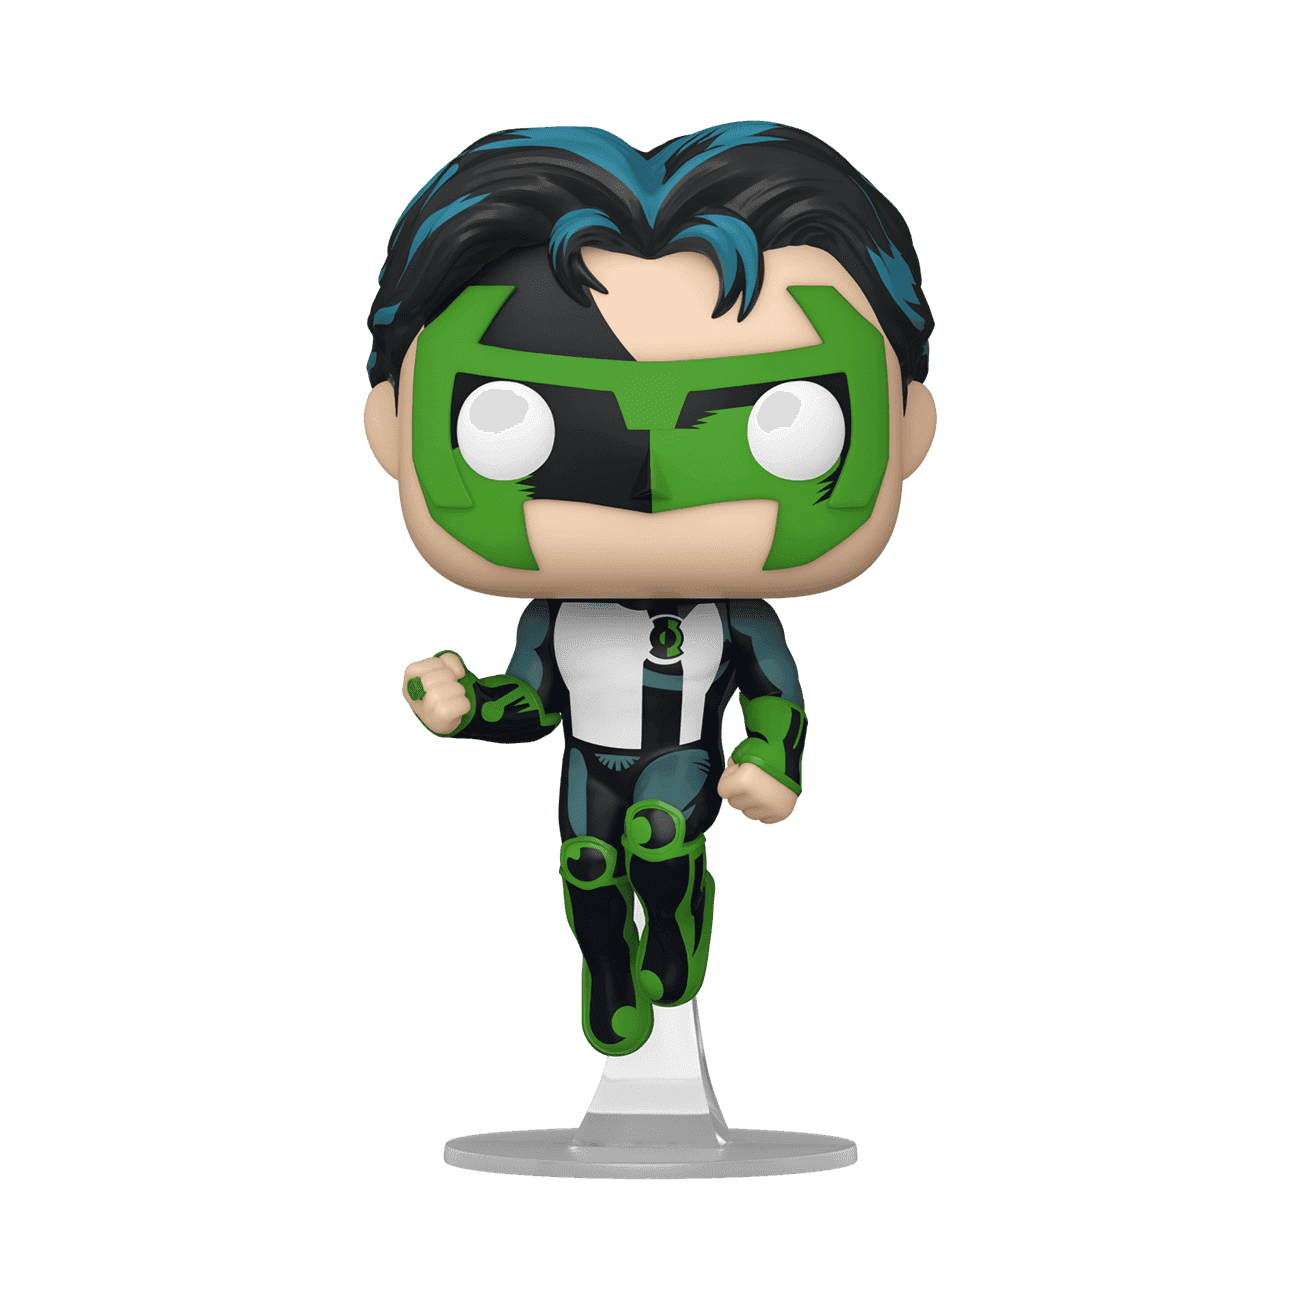 image de Green Lantern